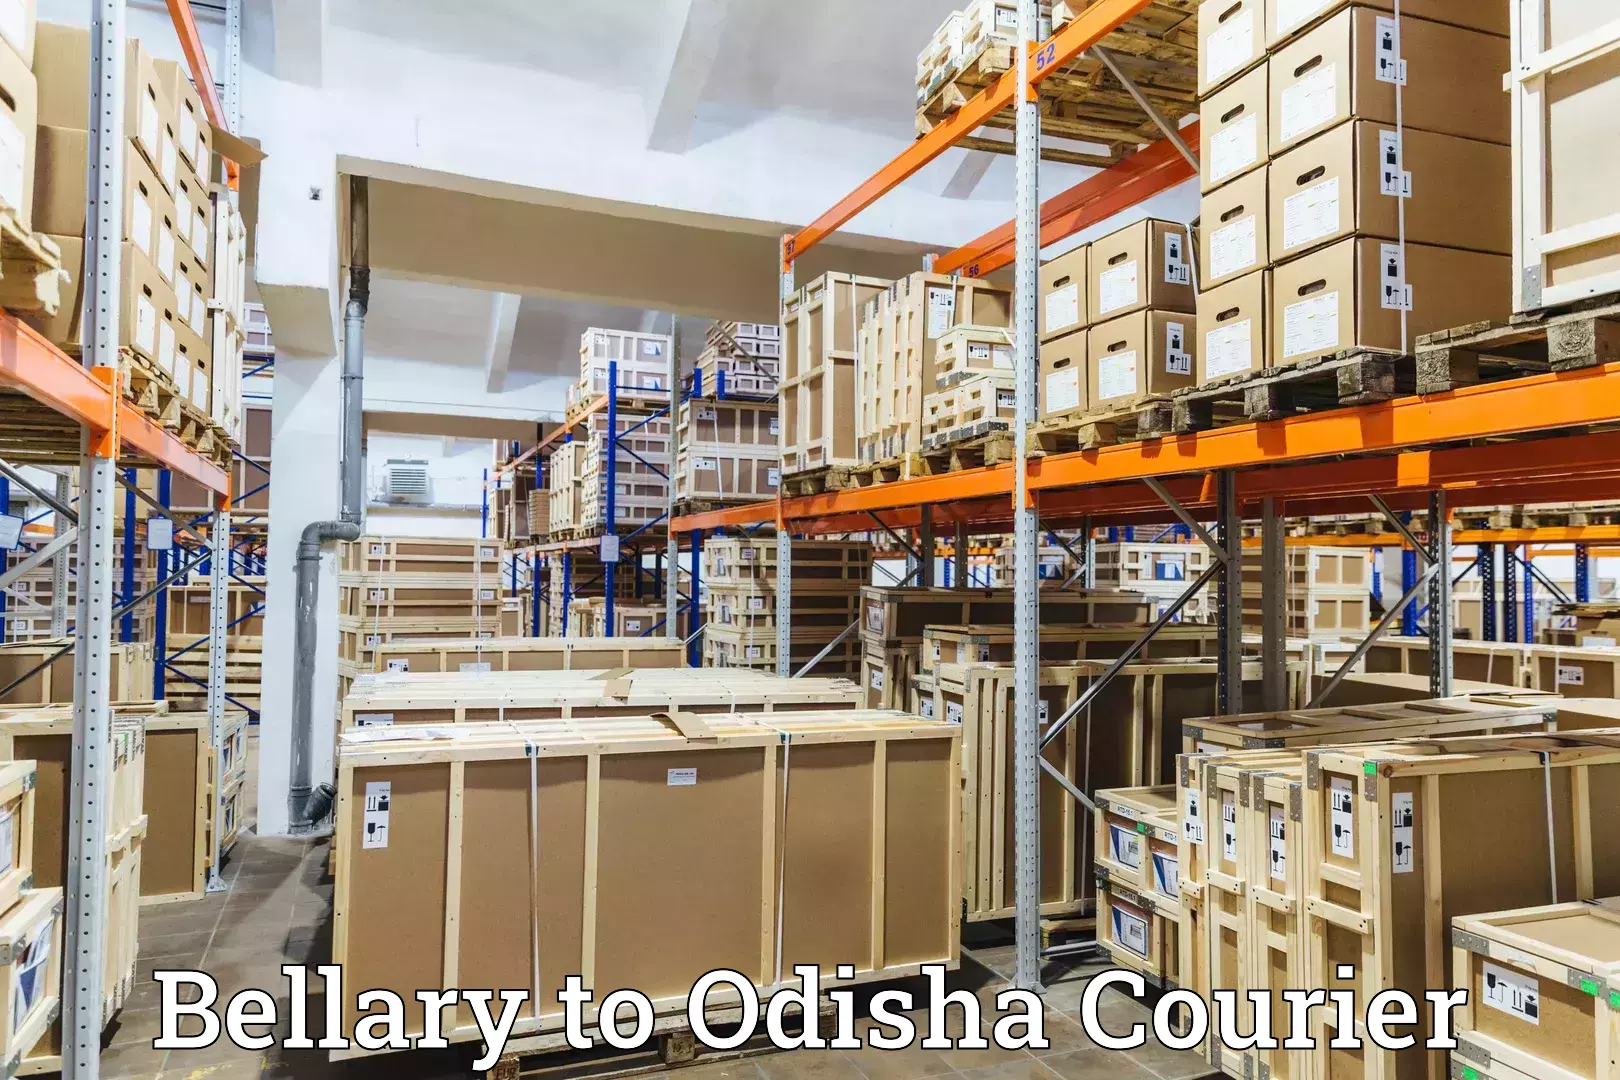 Courier service comparison in Bellary to Sohela